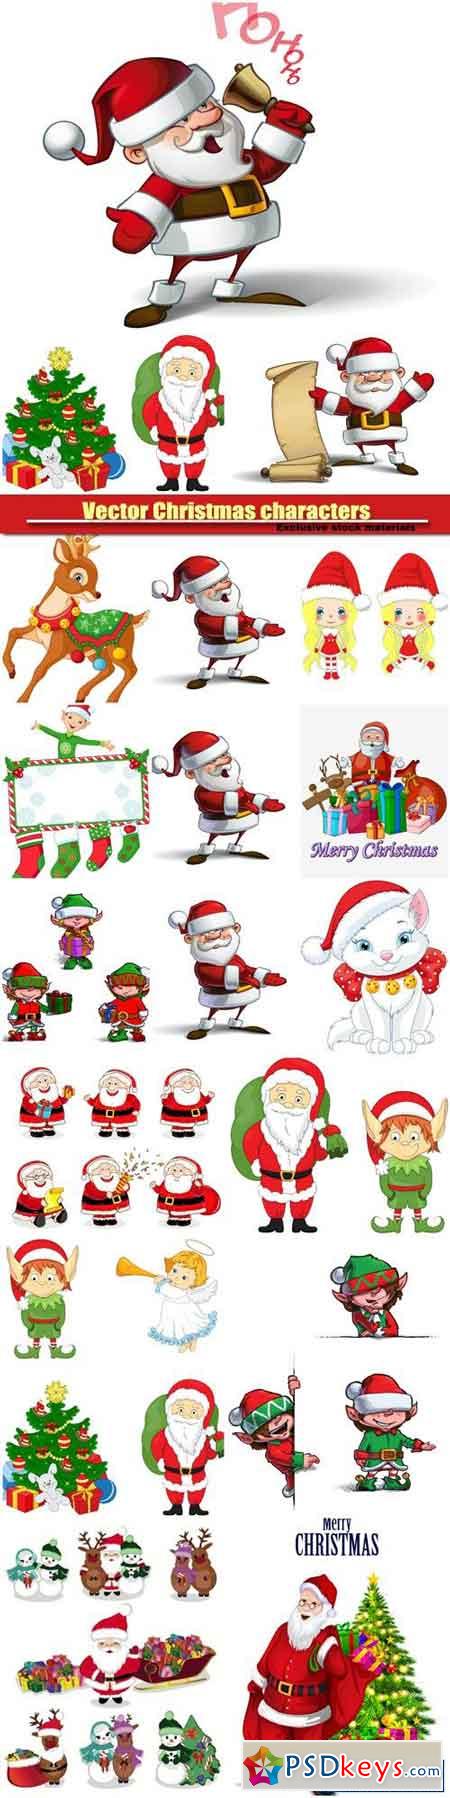 Christmas characters, Santa Claus, elves and snowmen